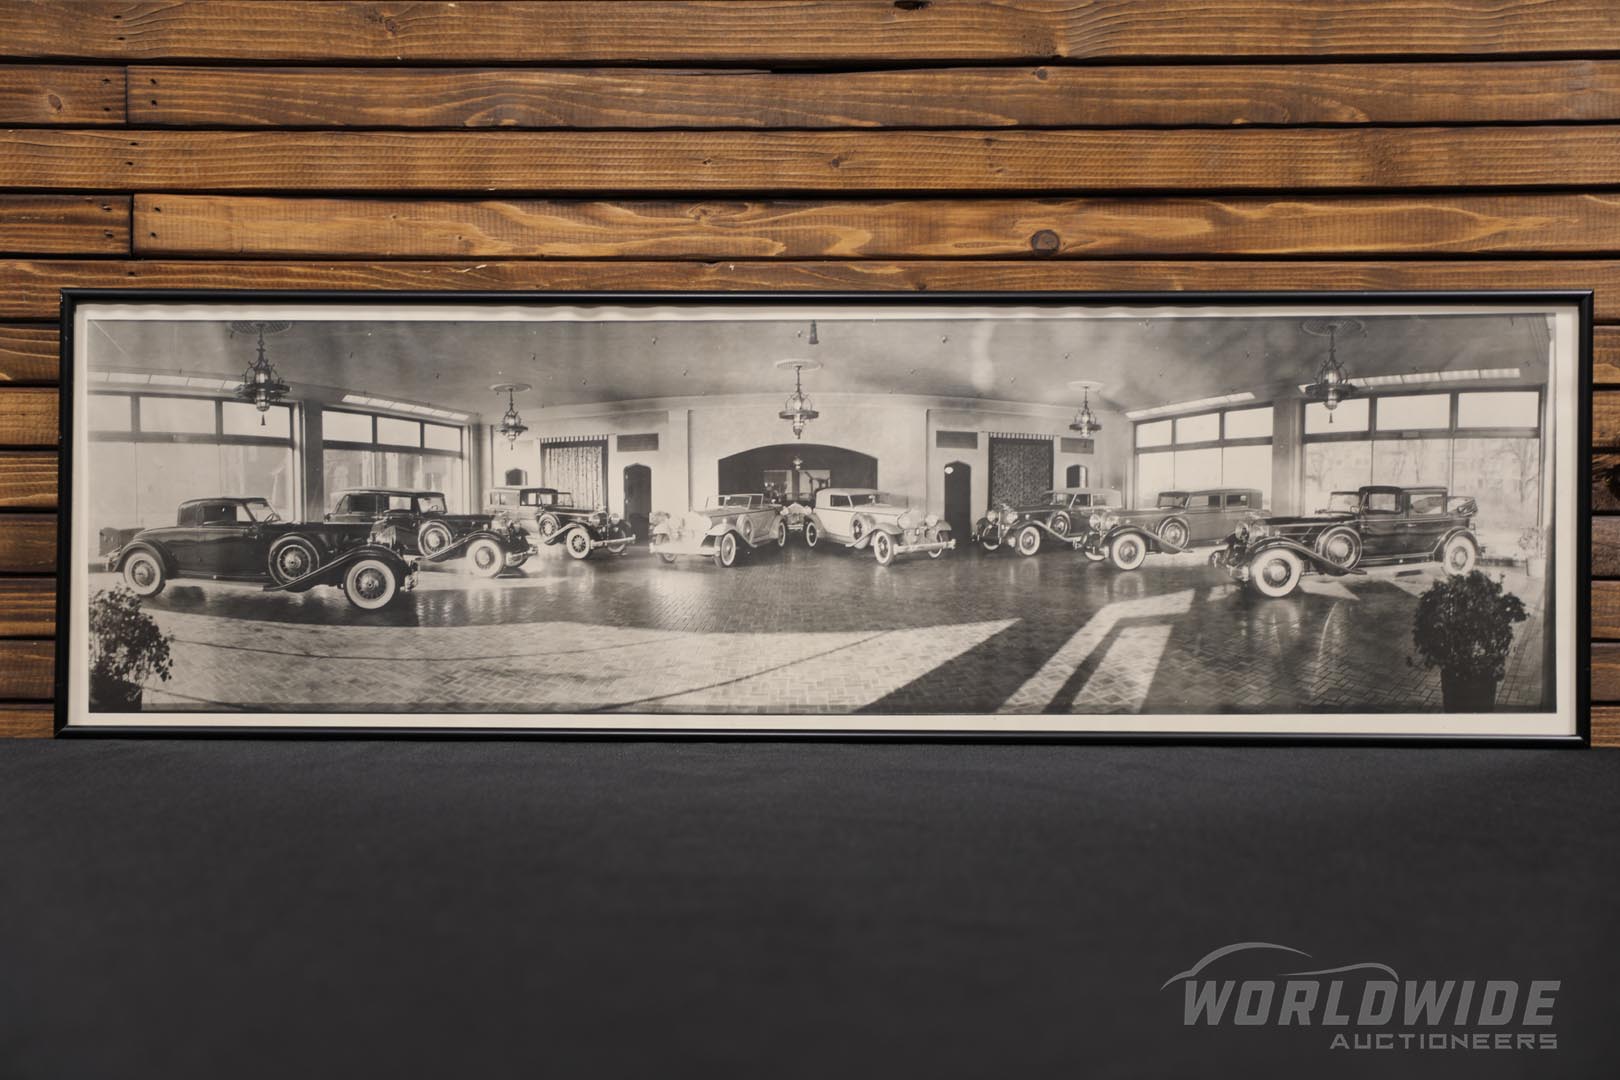  1932 Packard Showroom Panorami c Photo - Framed 